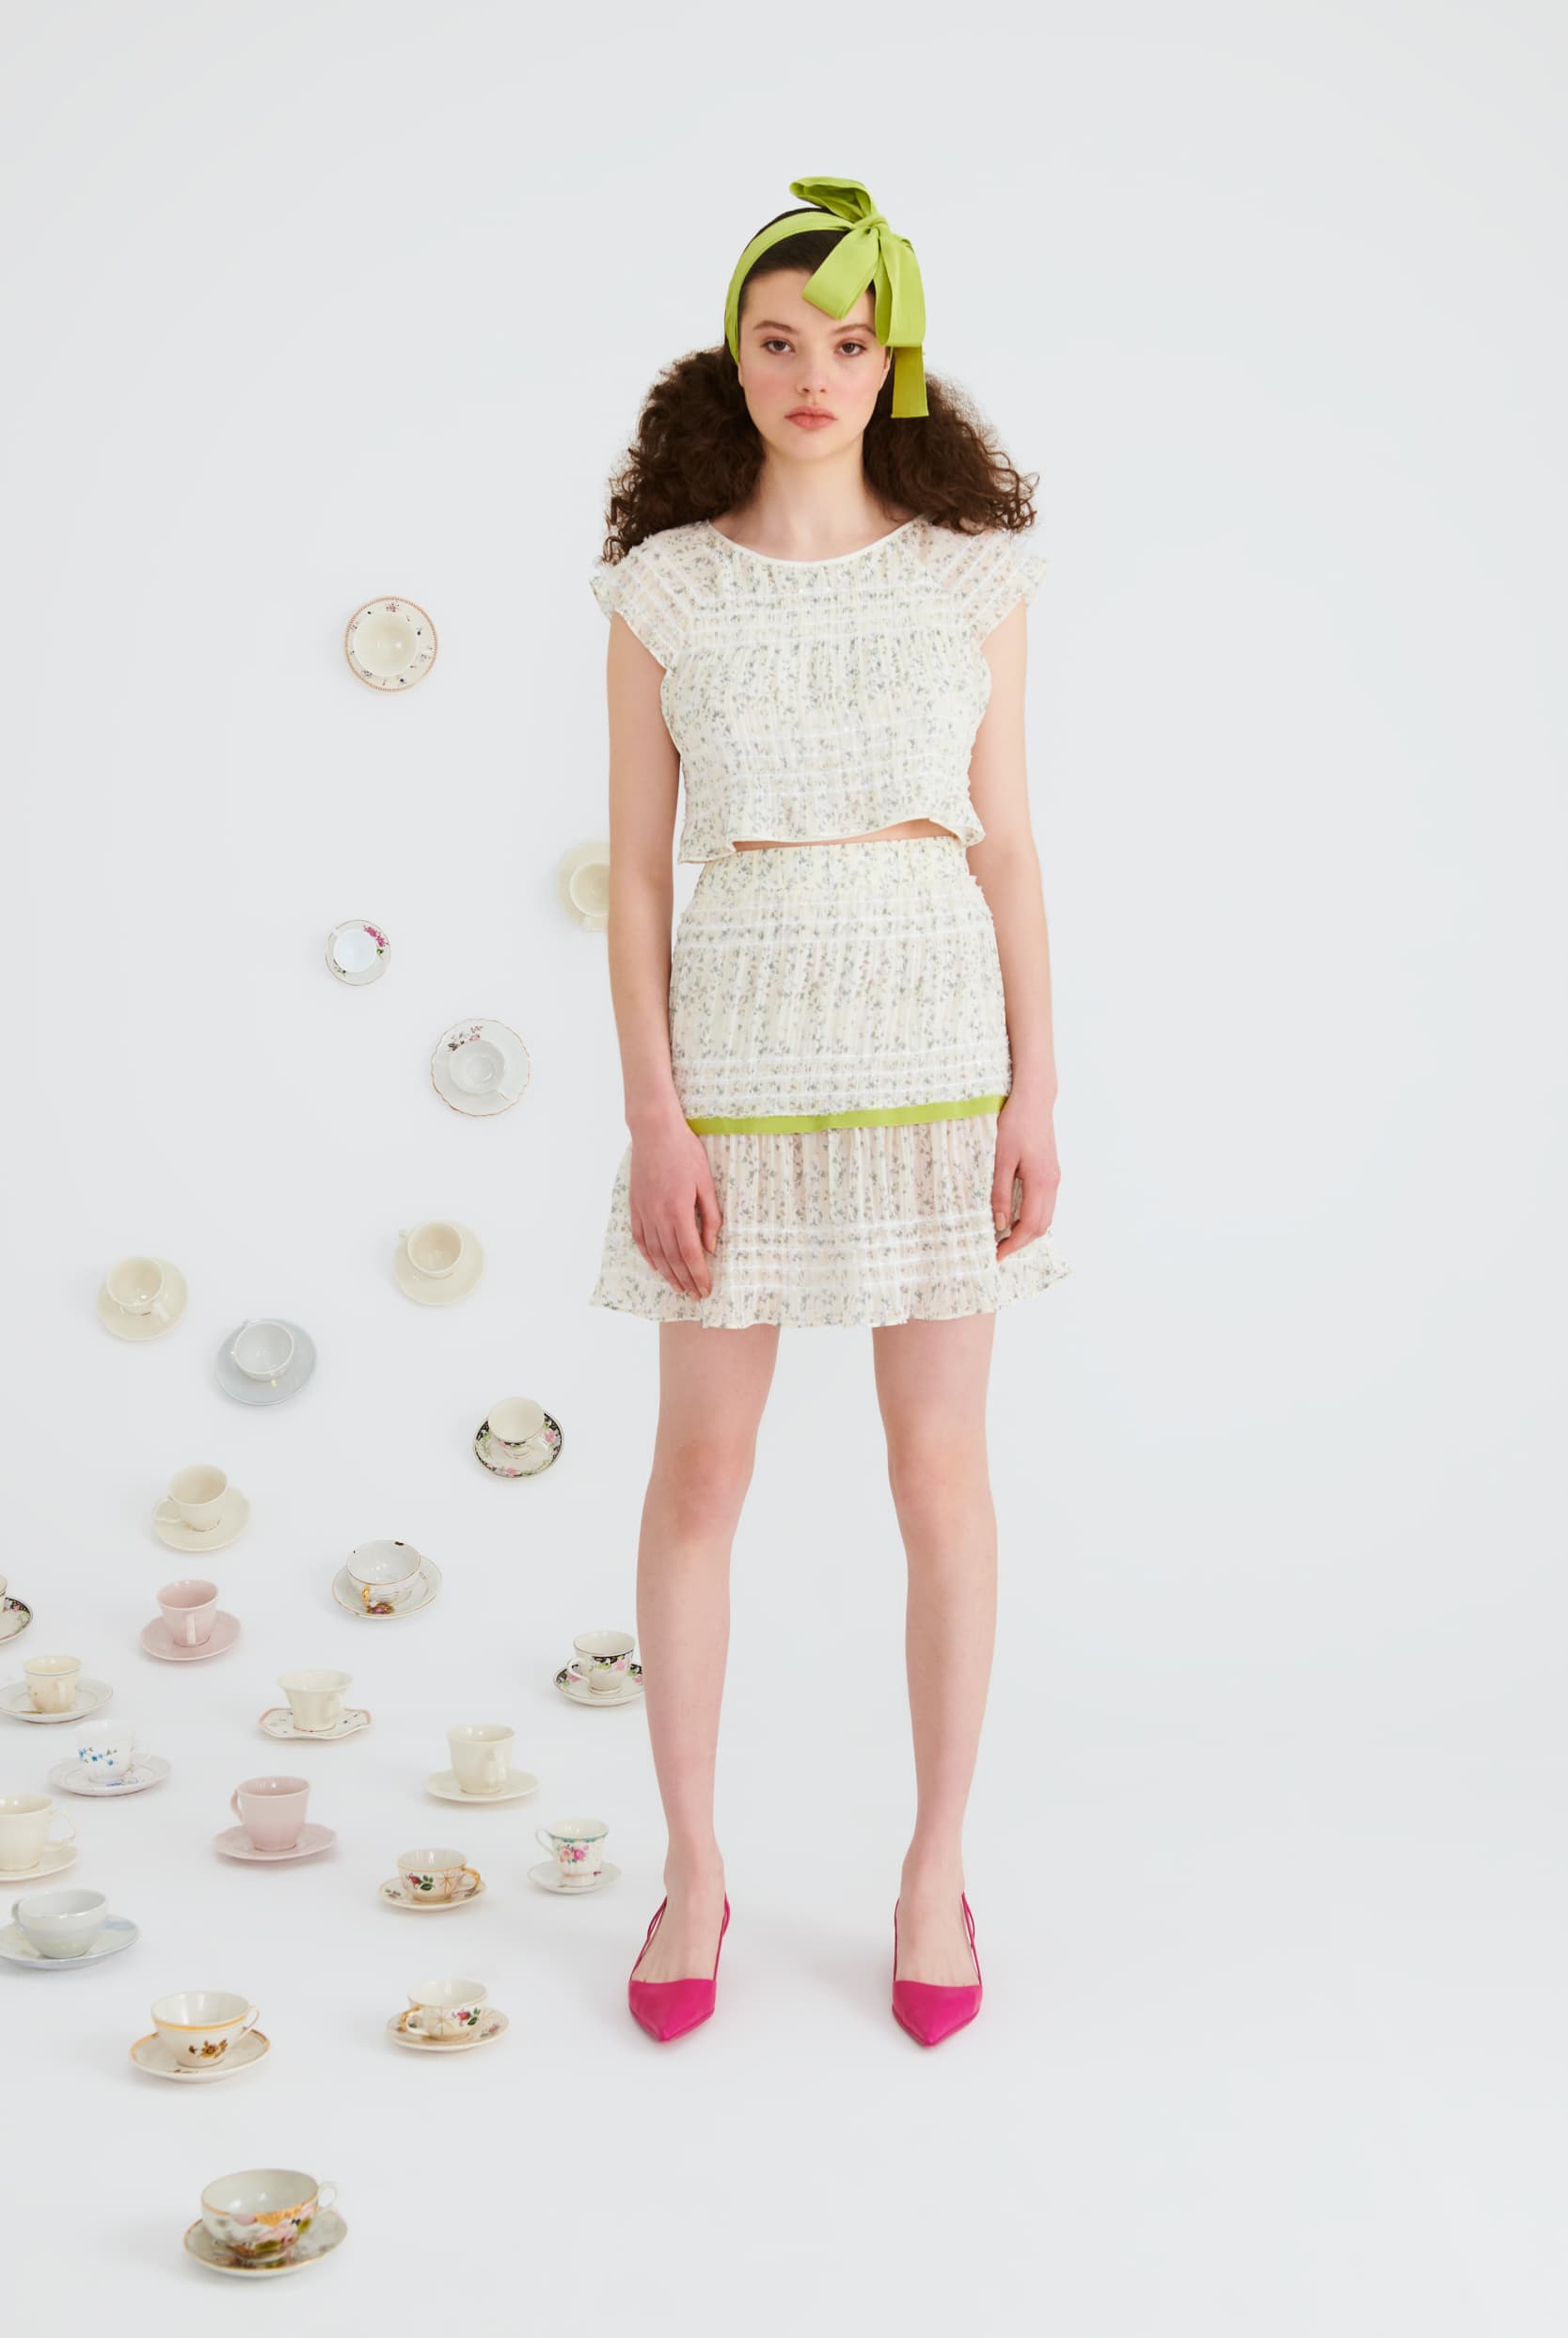 White Floral Mini Skirt -- [ORIGINAL]